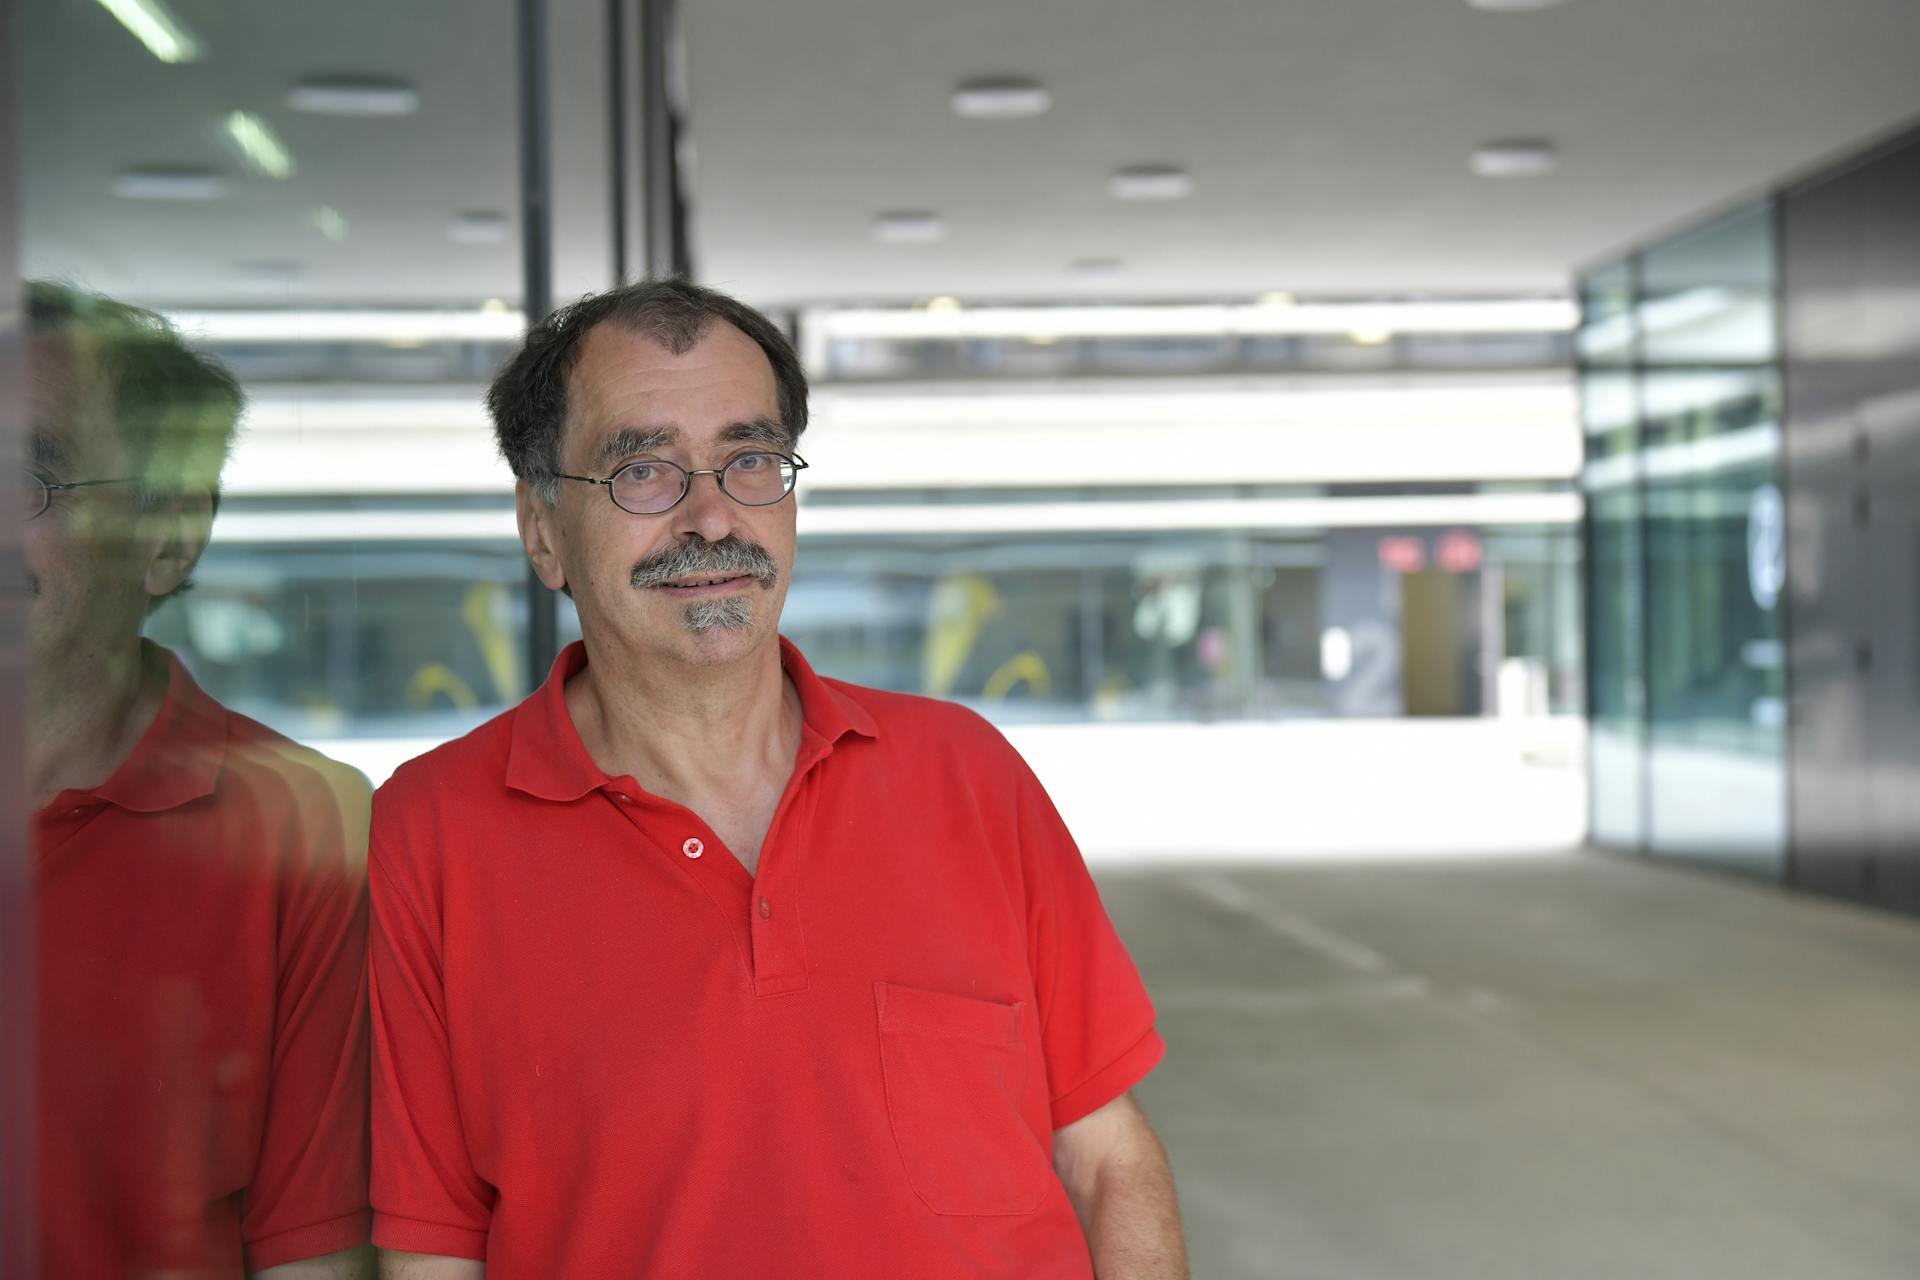 Sprachwissenschaftler Prof. Dr. Dr. hc. Peter Gallmann in rotem Poloshirt